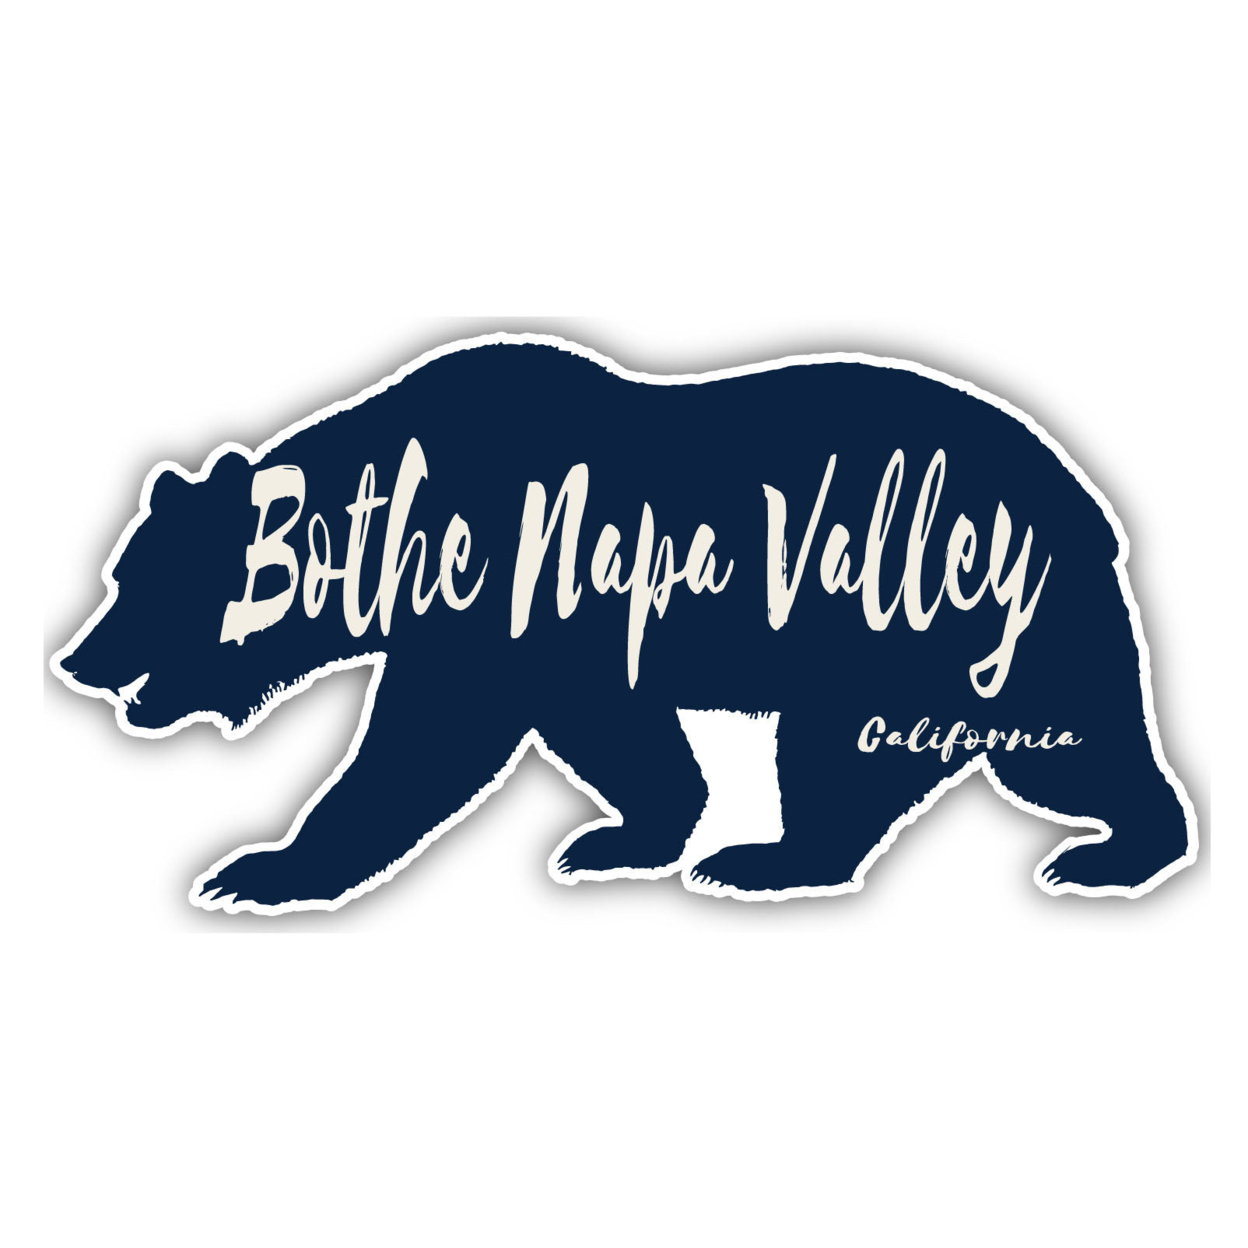 Bothe Napa Valley California Souvenir Decorative Stickers (Choose Theme And Size) - Single Unit, 2-Inch, Bear